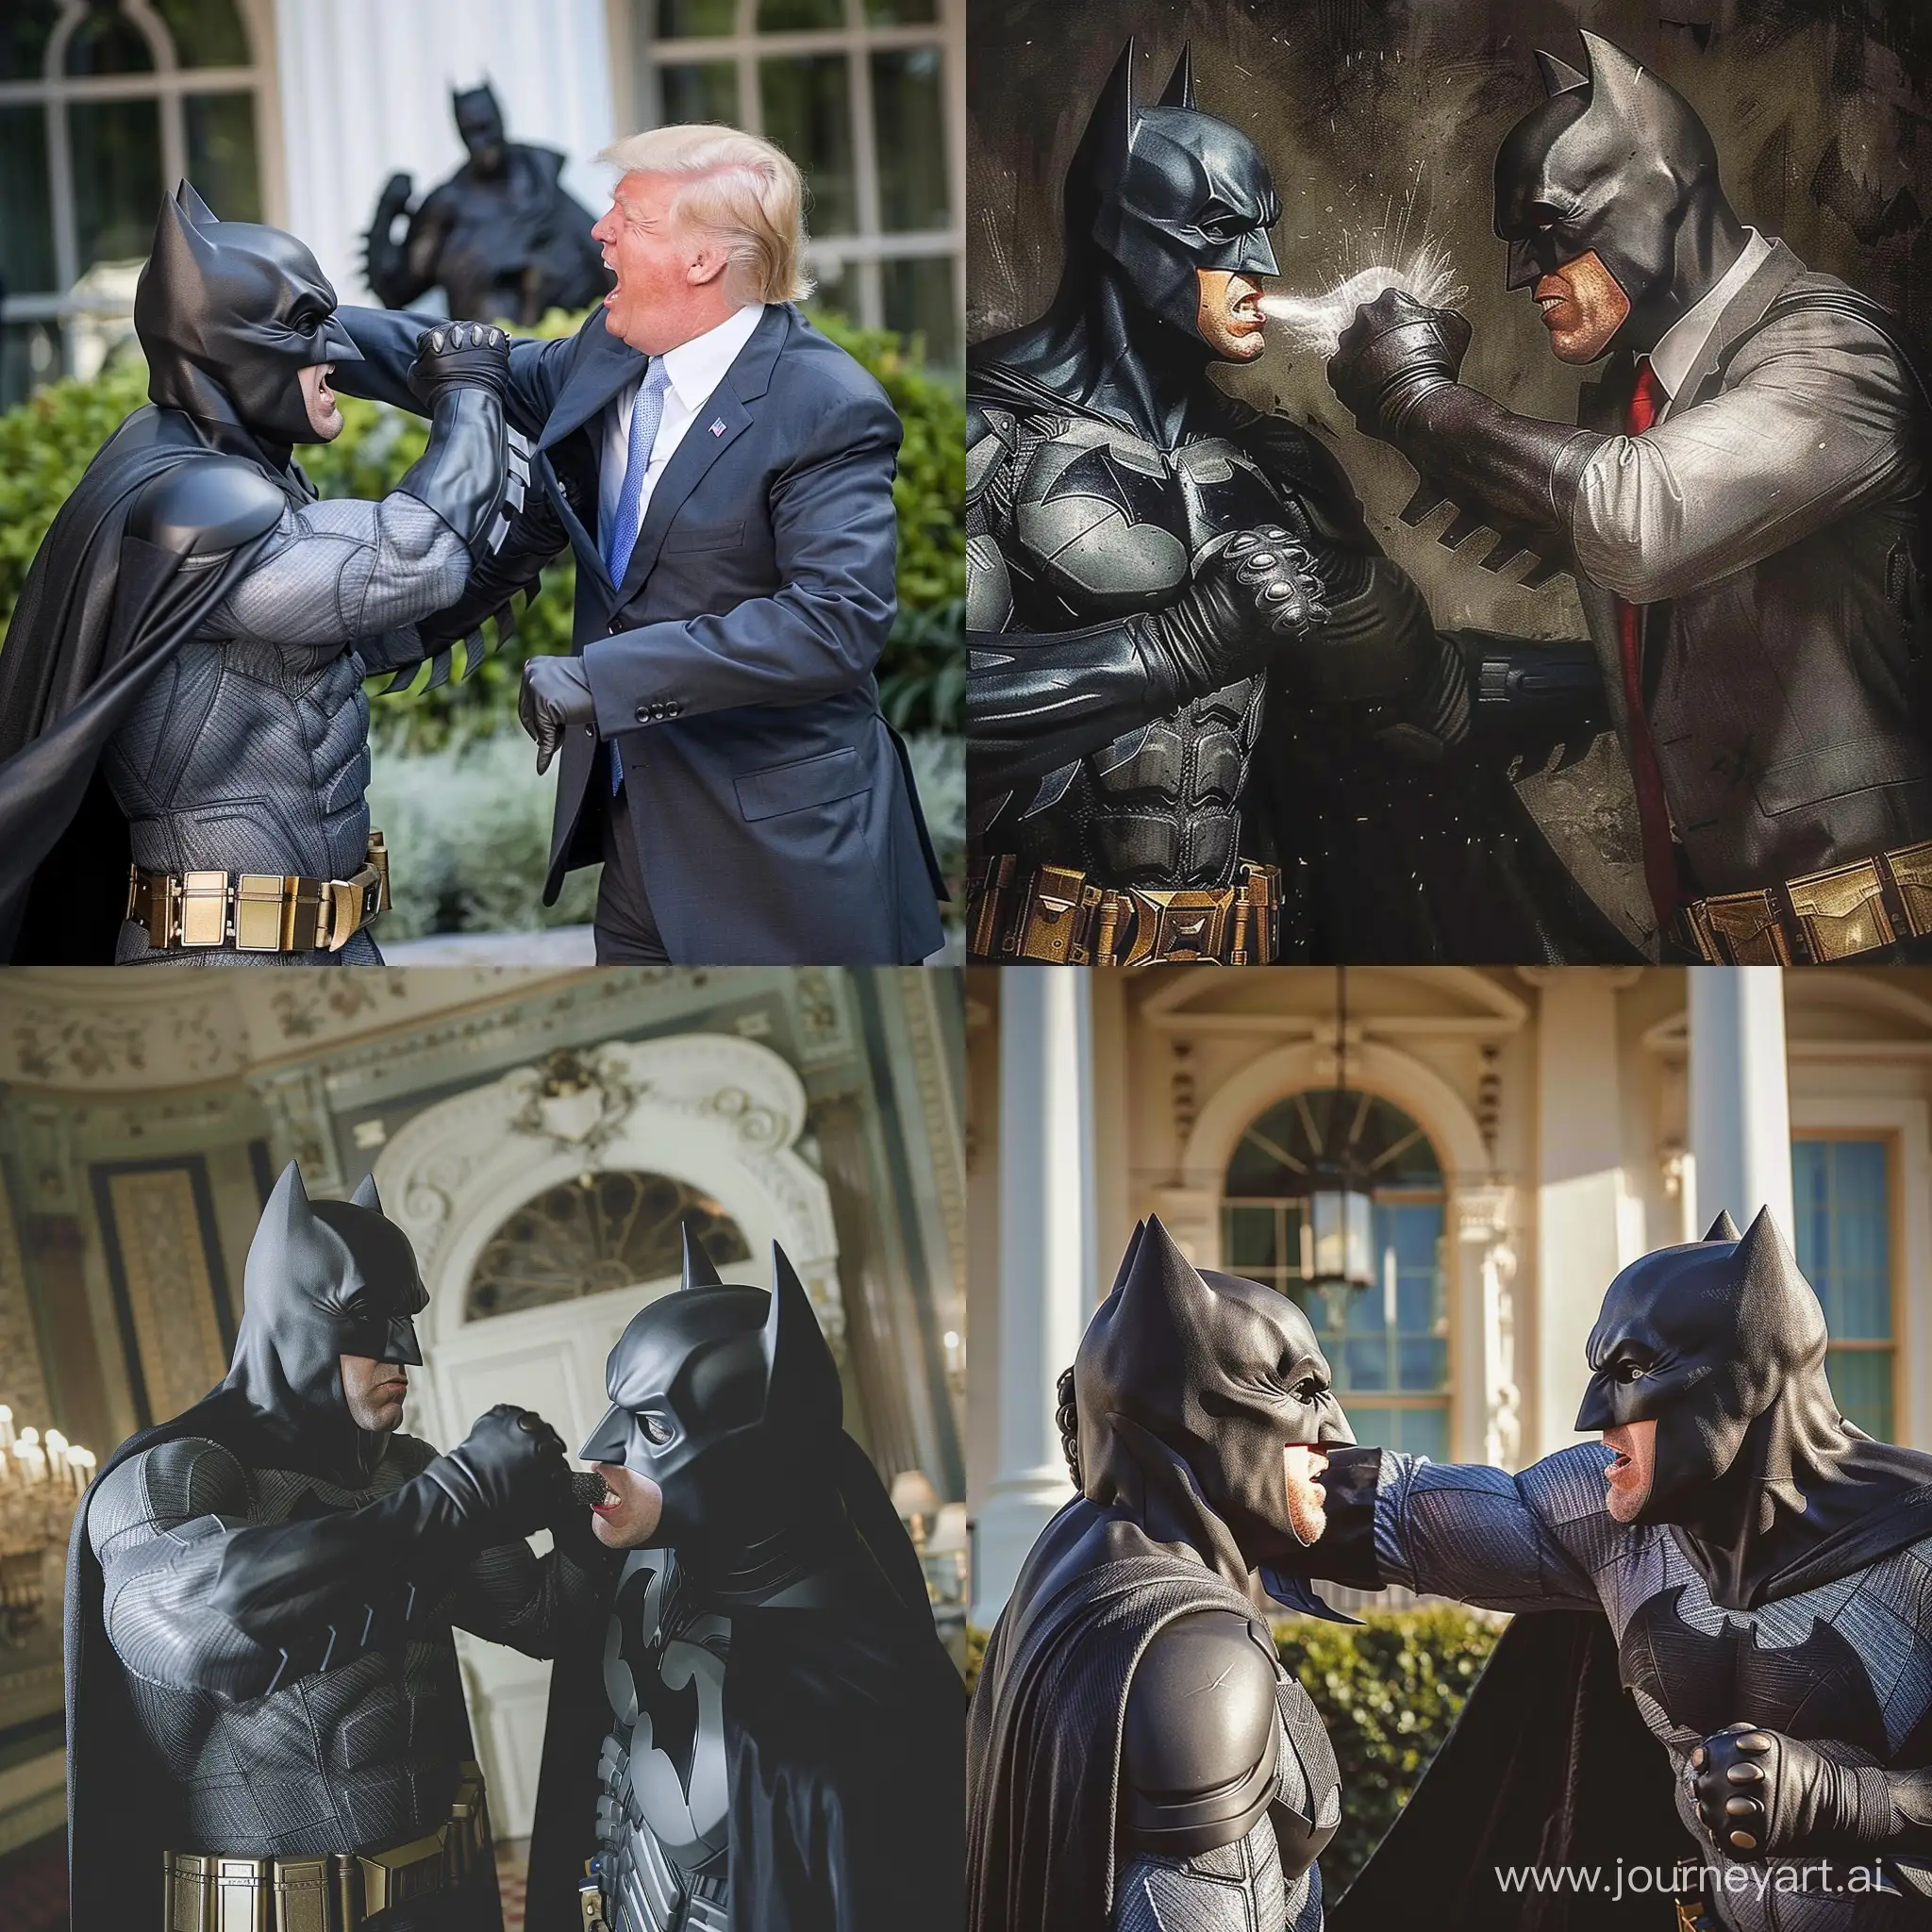 Batman-Punching-American-President-in-Vigilante-Justice-Scene